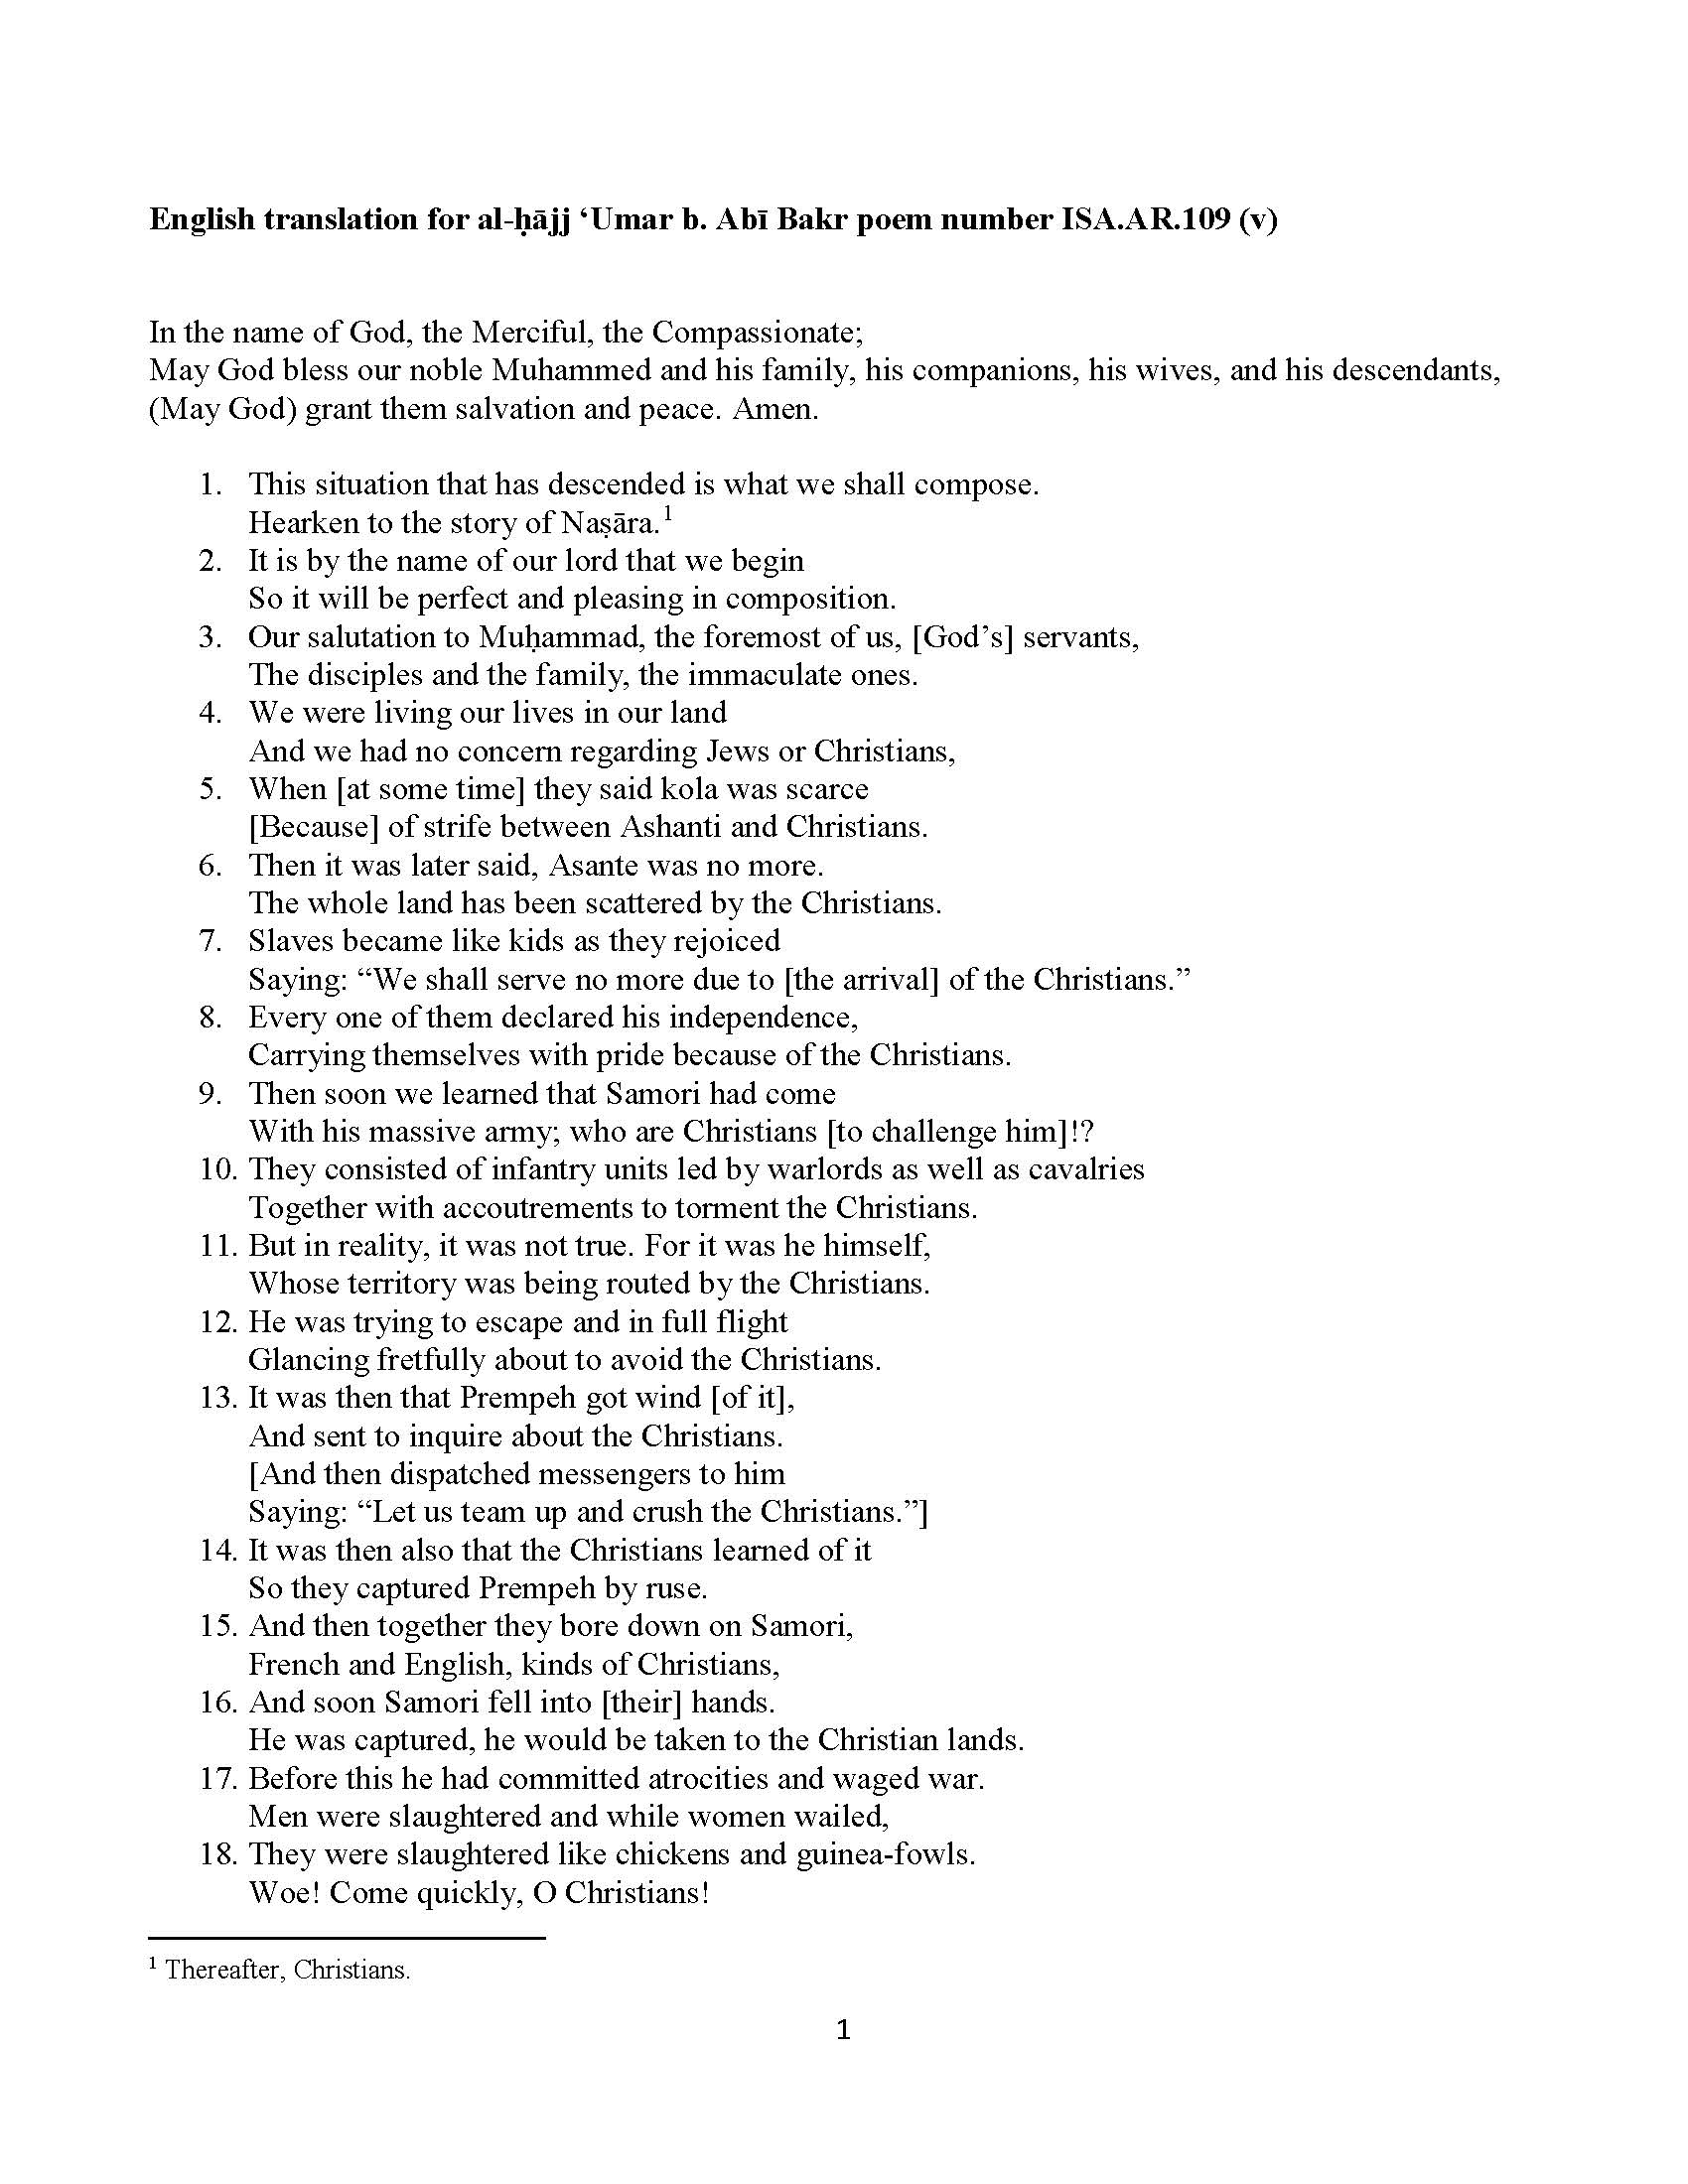 Colonial Rule 3 (historical poem)